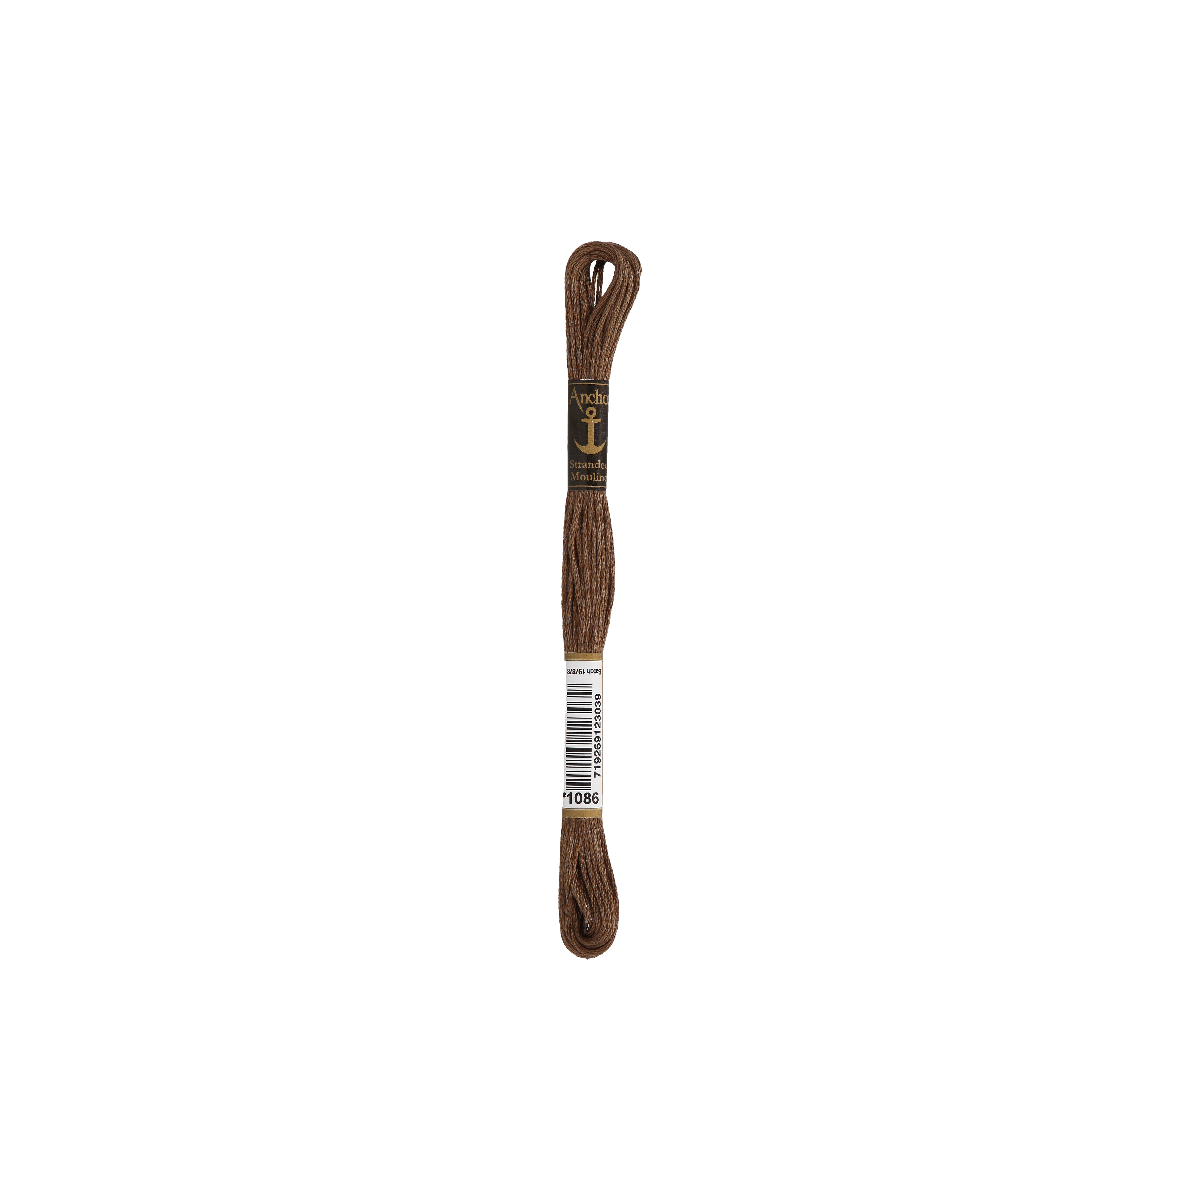 Anchor Sticktwist 8m, medium bruin, katoen, kleur 1086,...